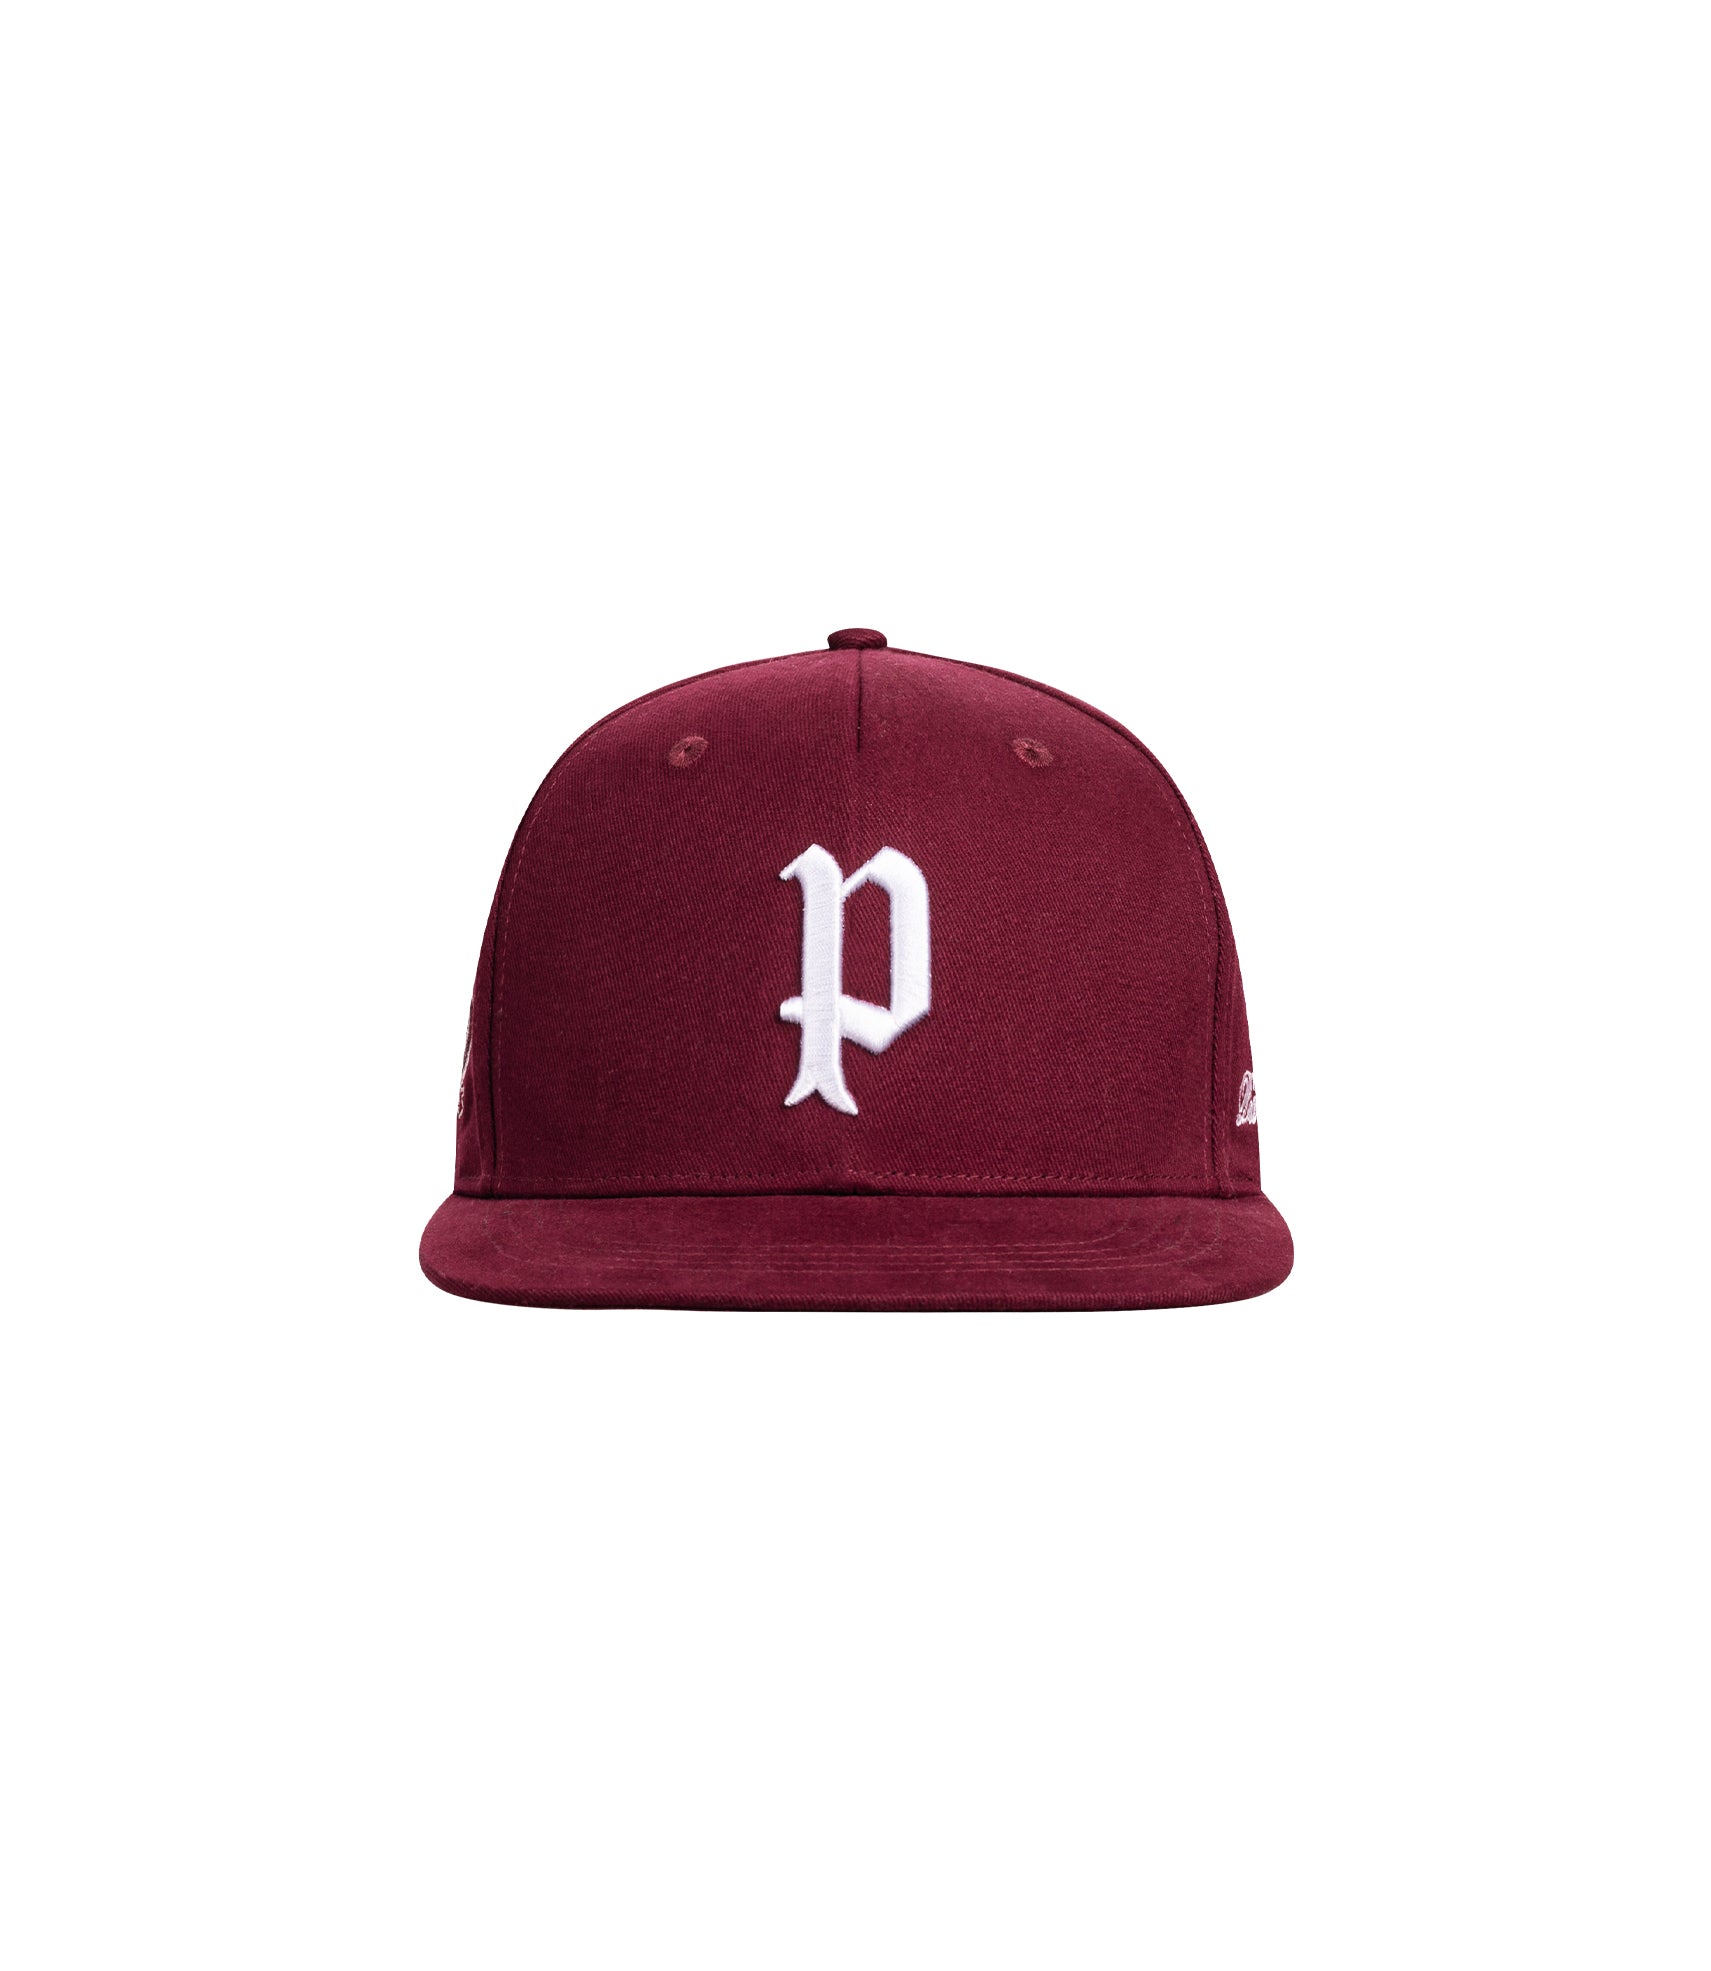 PESOCLO – Peso Baseball Cap